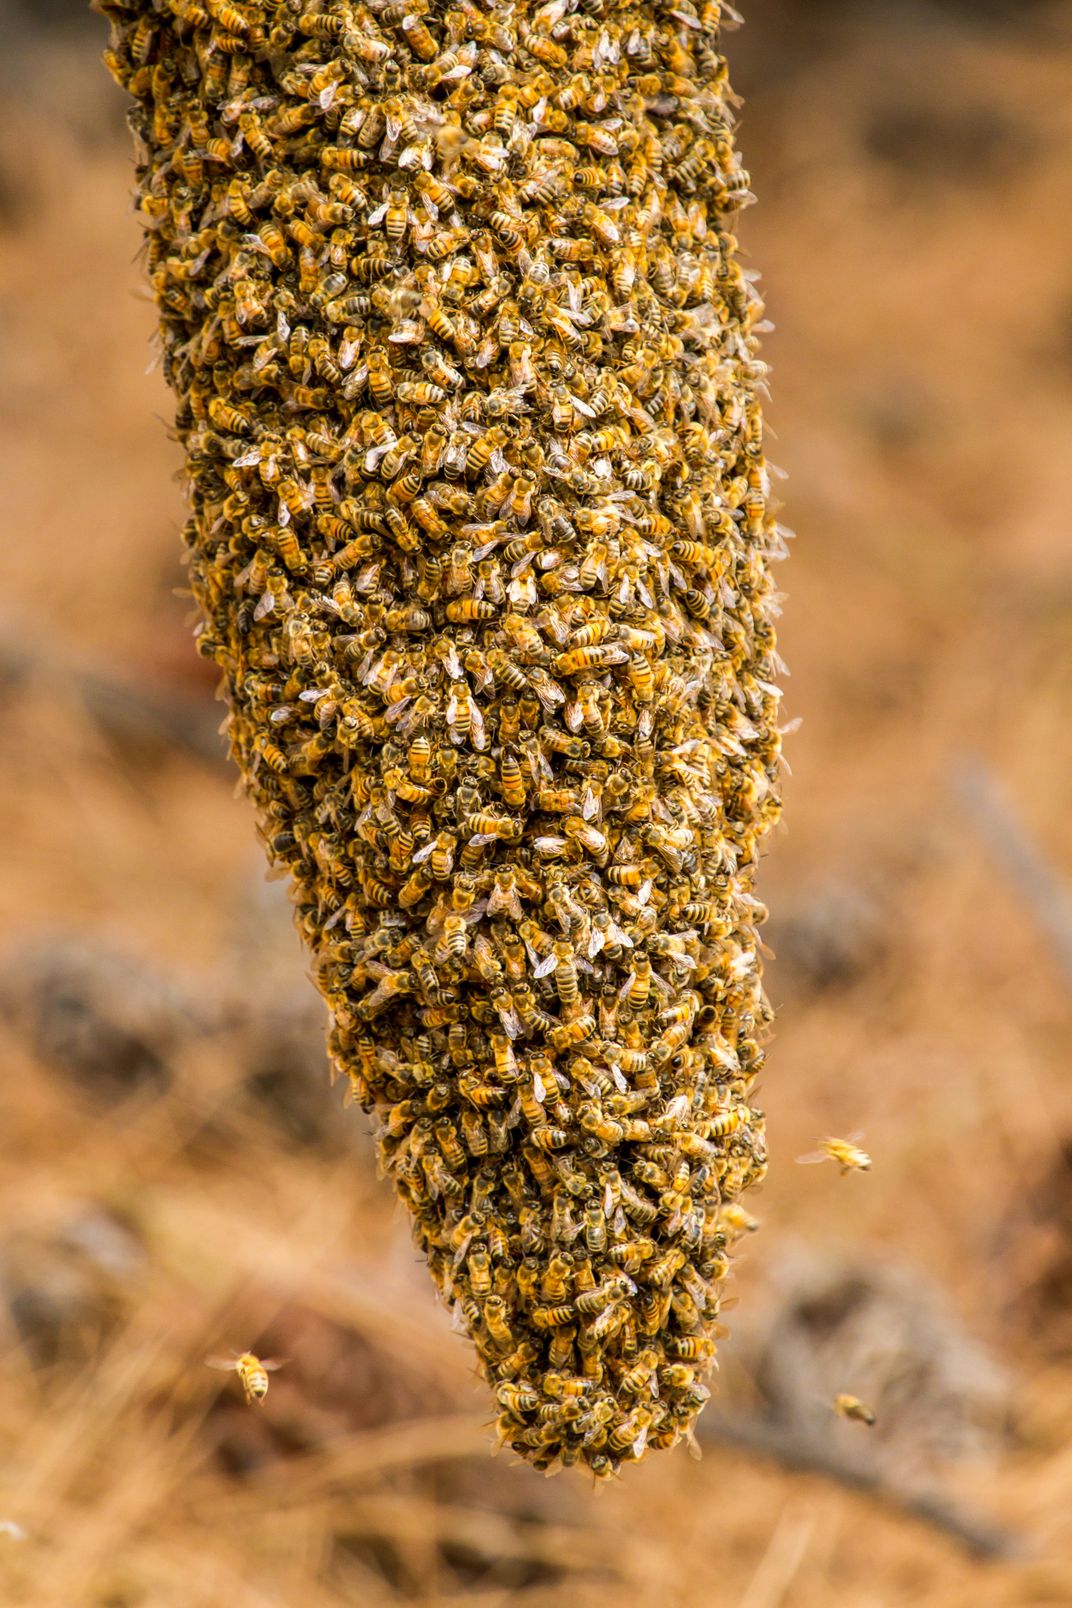 Honeybees Swarming Research Paper